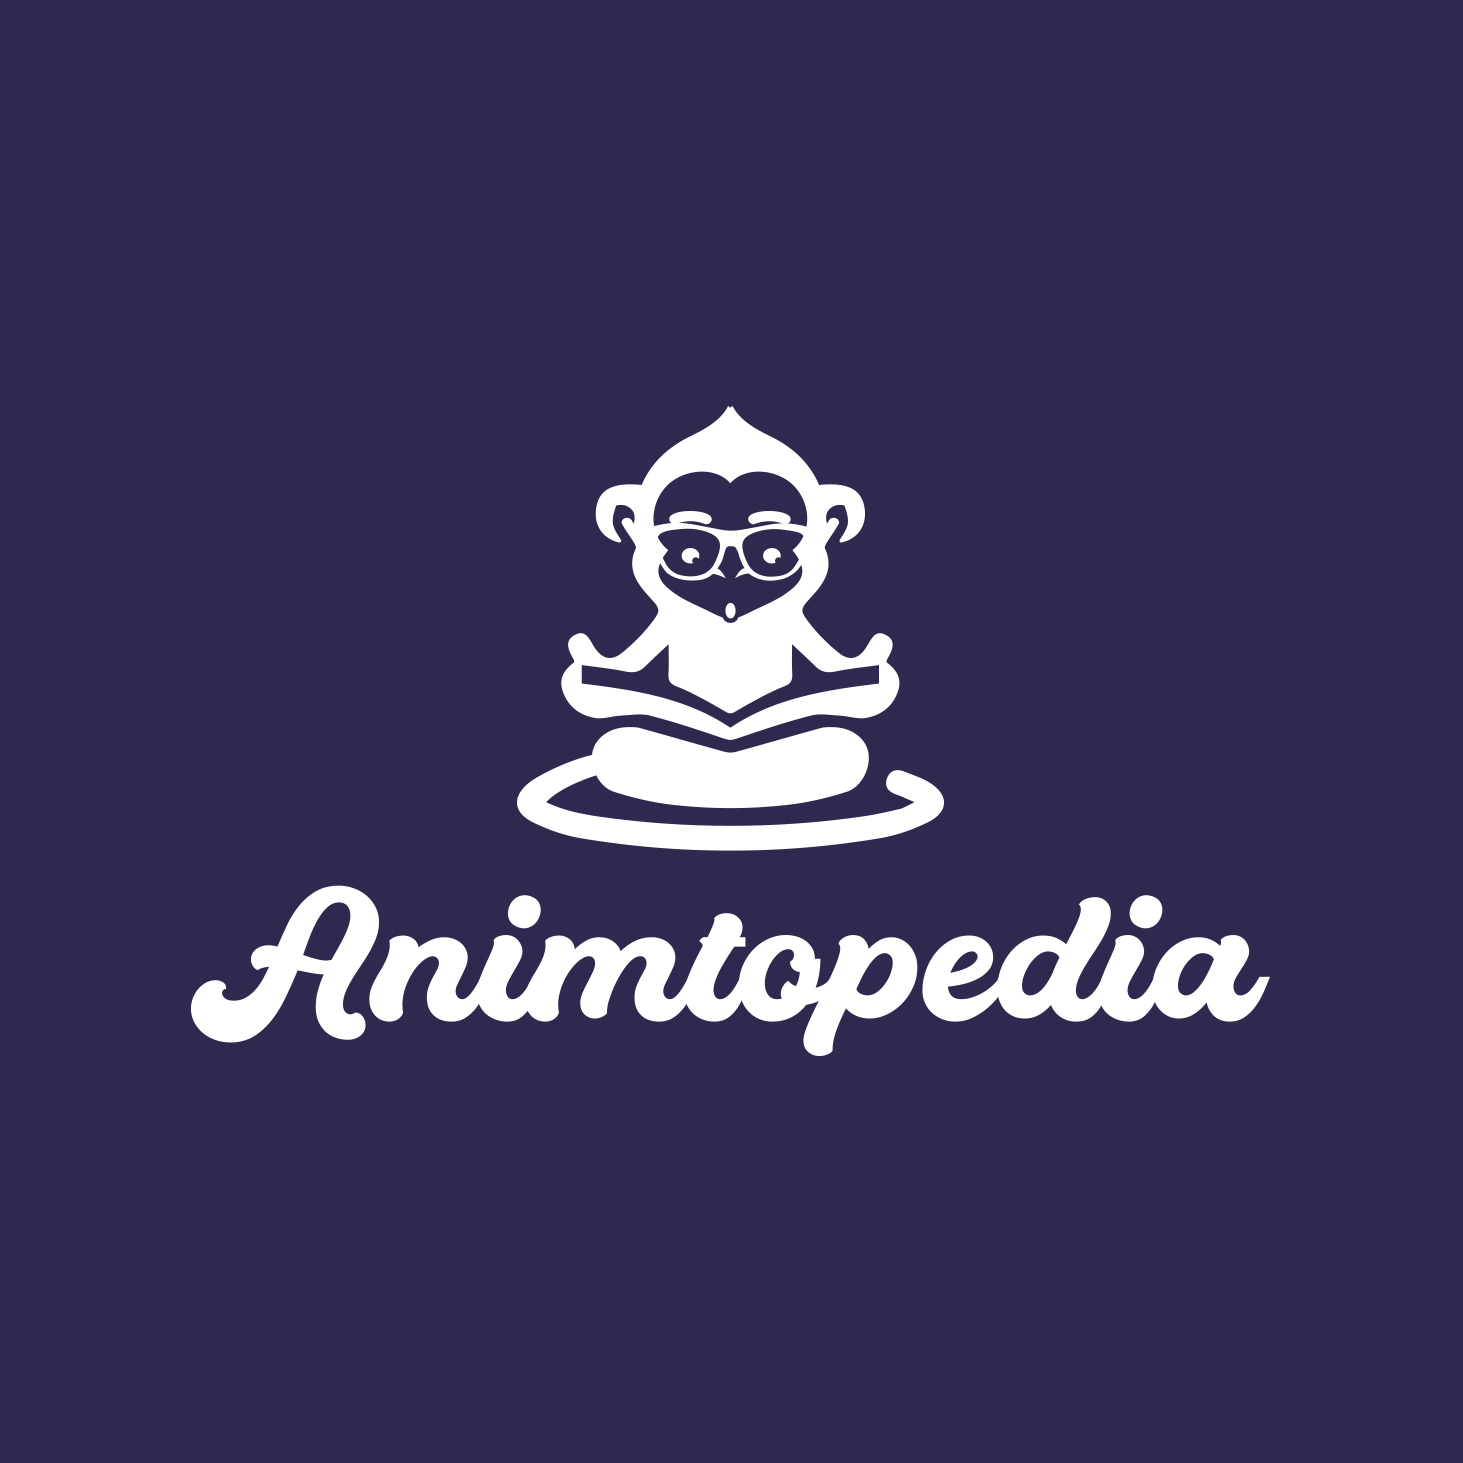 About Animtopedia